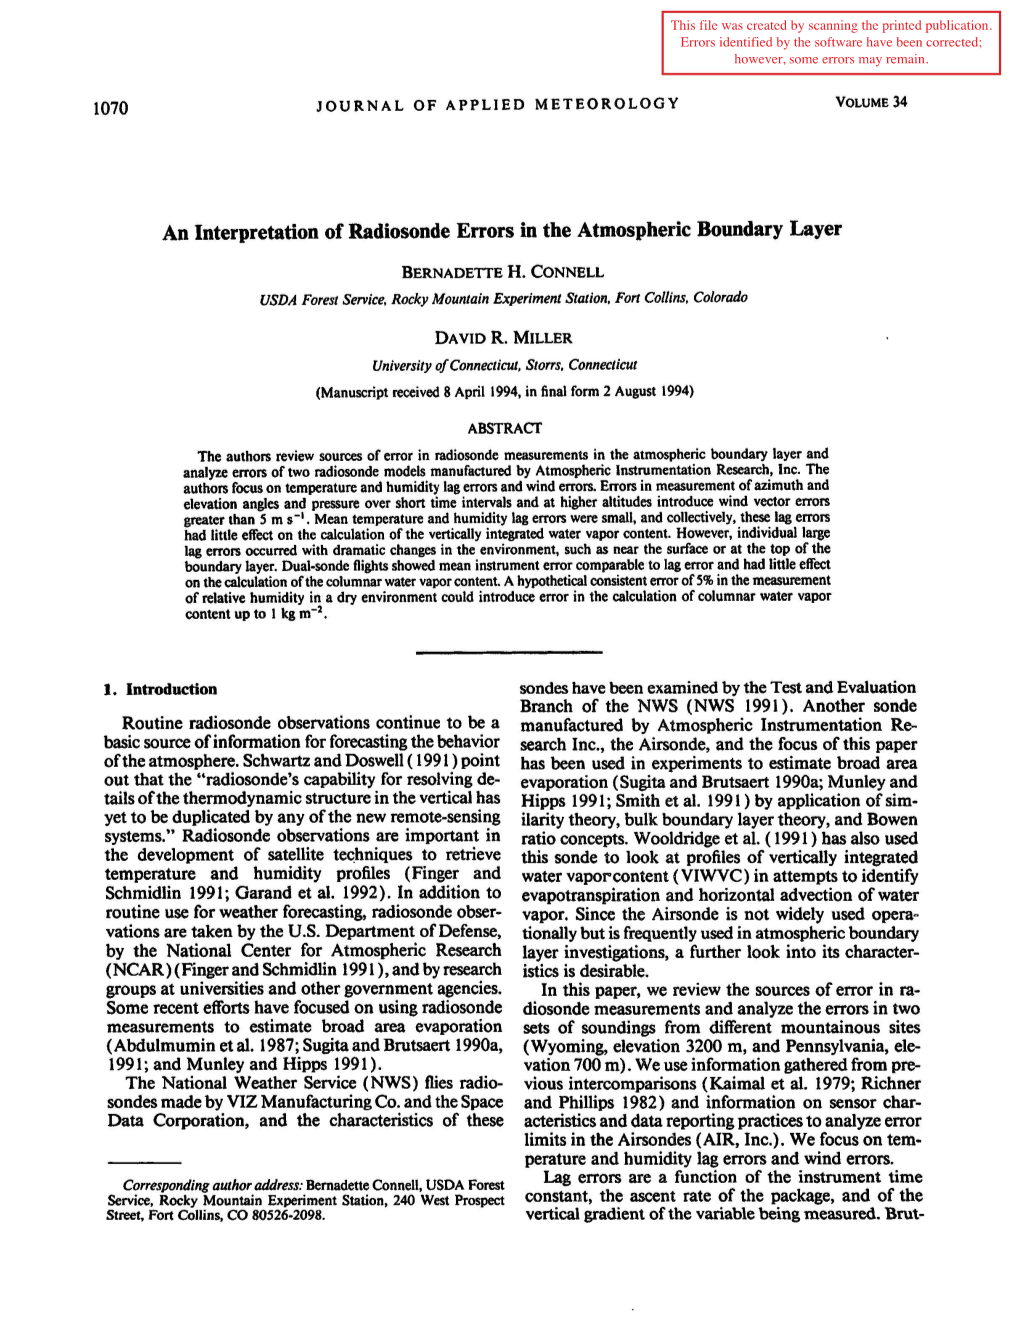 An Interpretation of Radiosonde Errors in the Atmospheric Boundary Layer